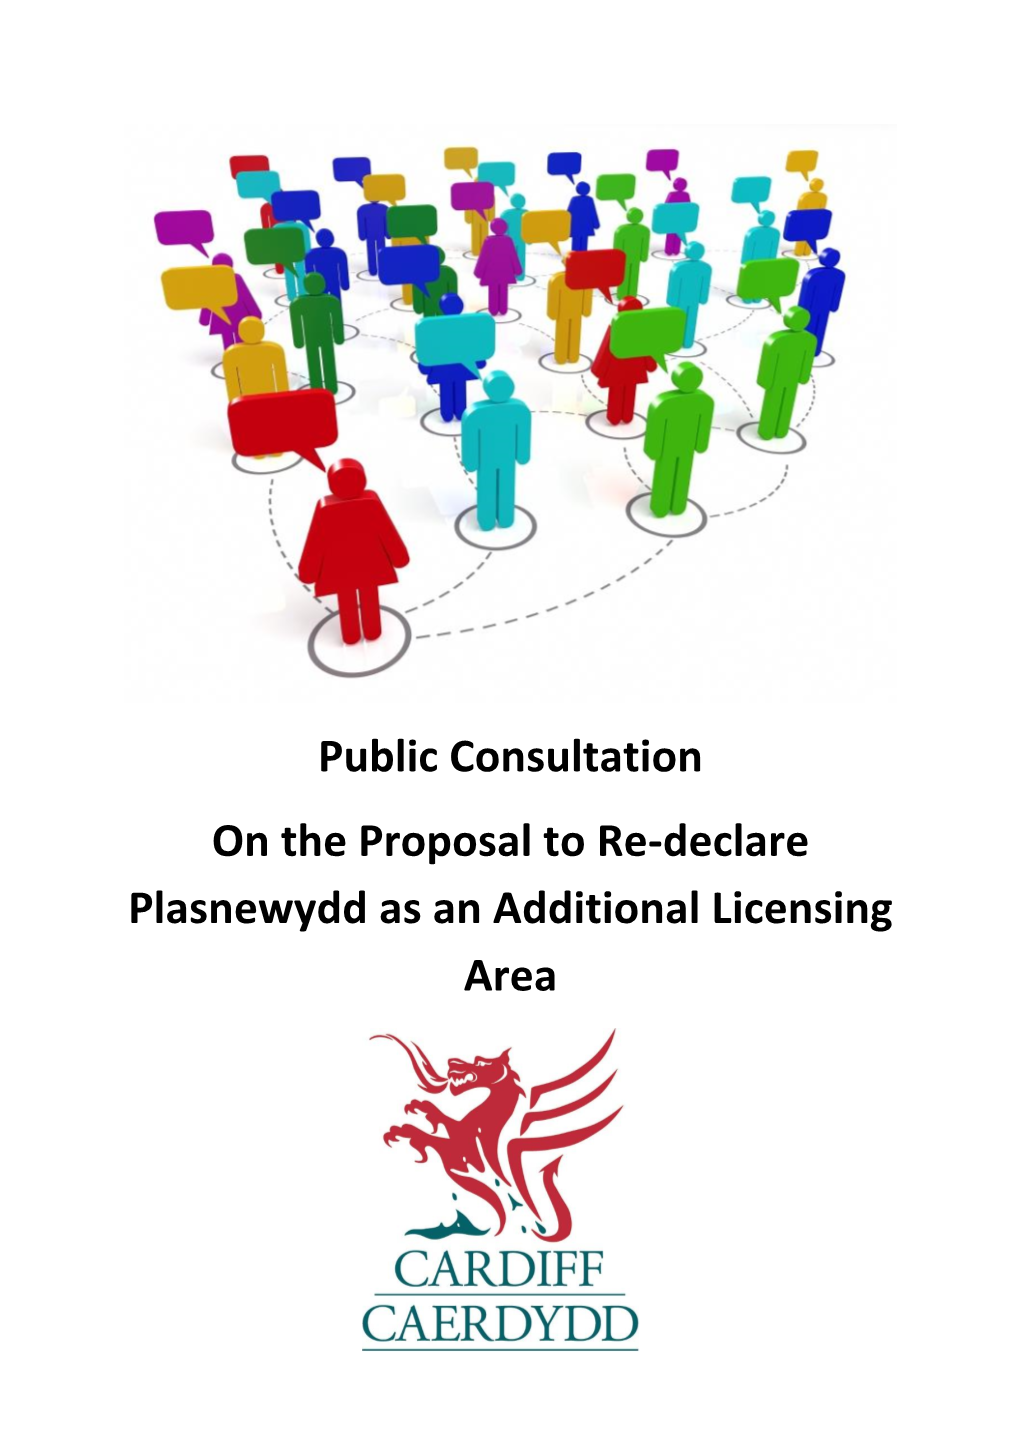 Public Consultation to Redeclare Plasnewydd